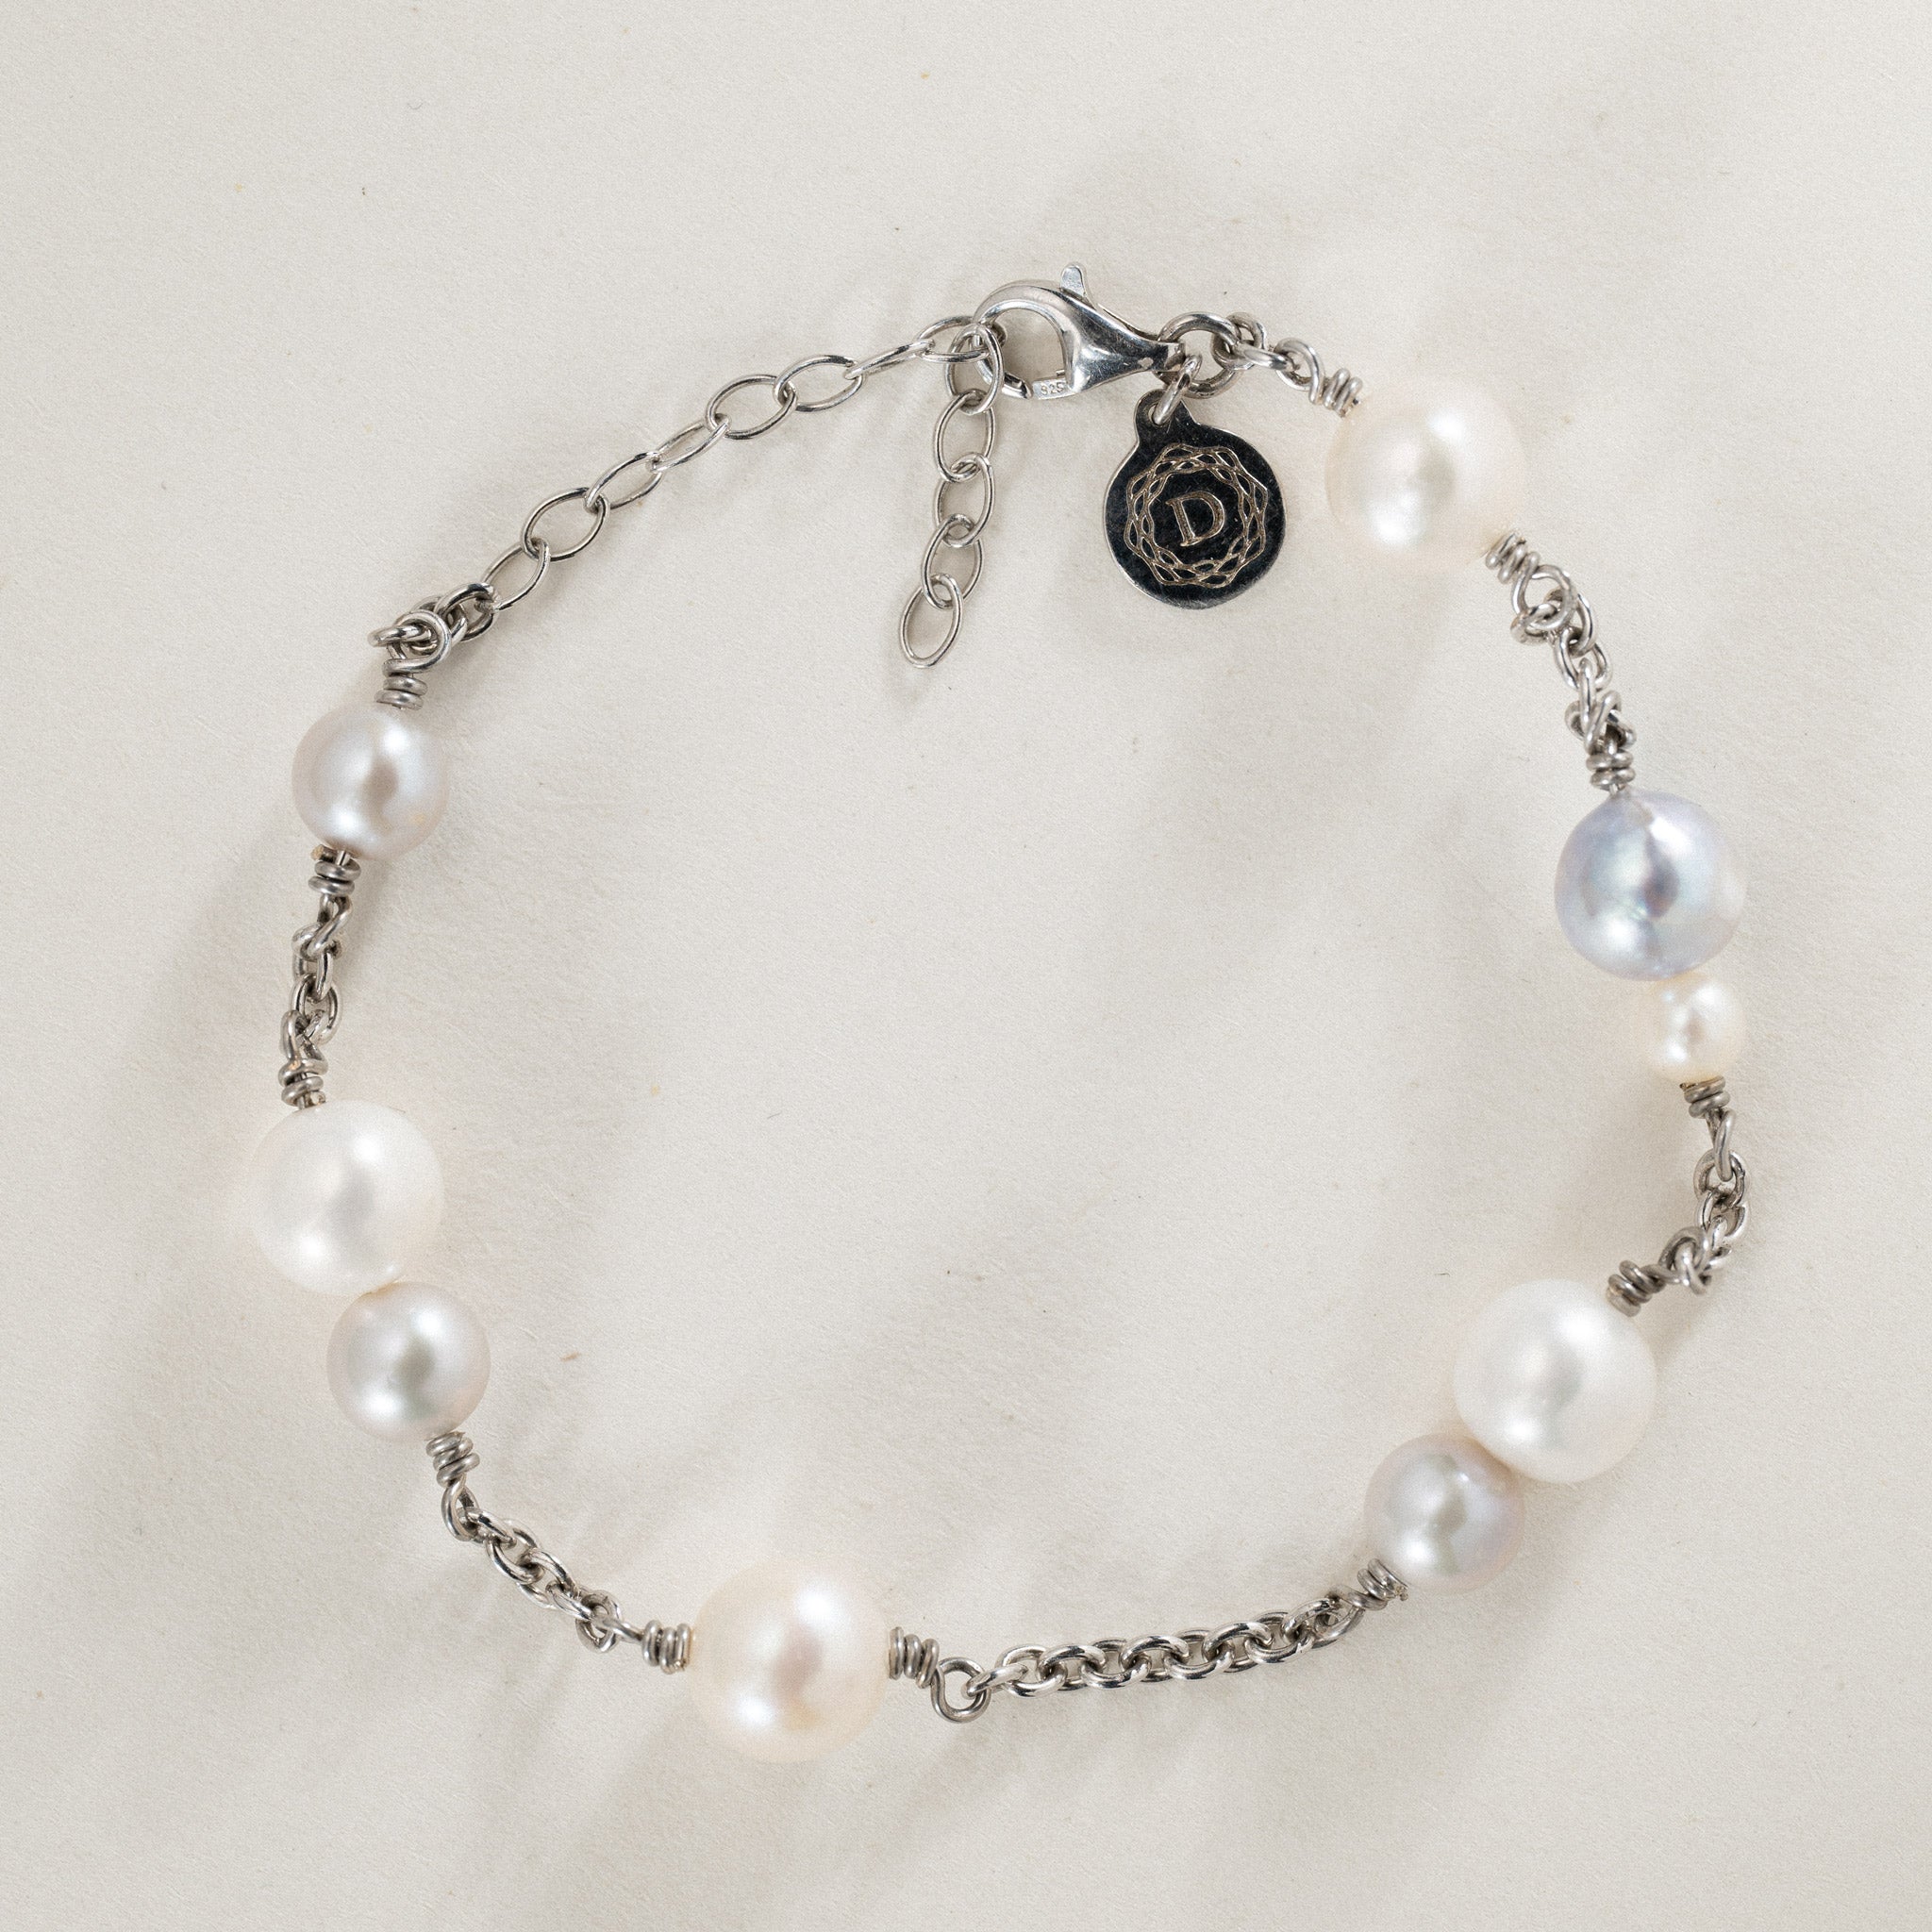 No. 27 - Freshwater pearl bracelet in rhodium silver